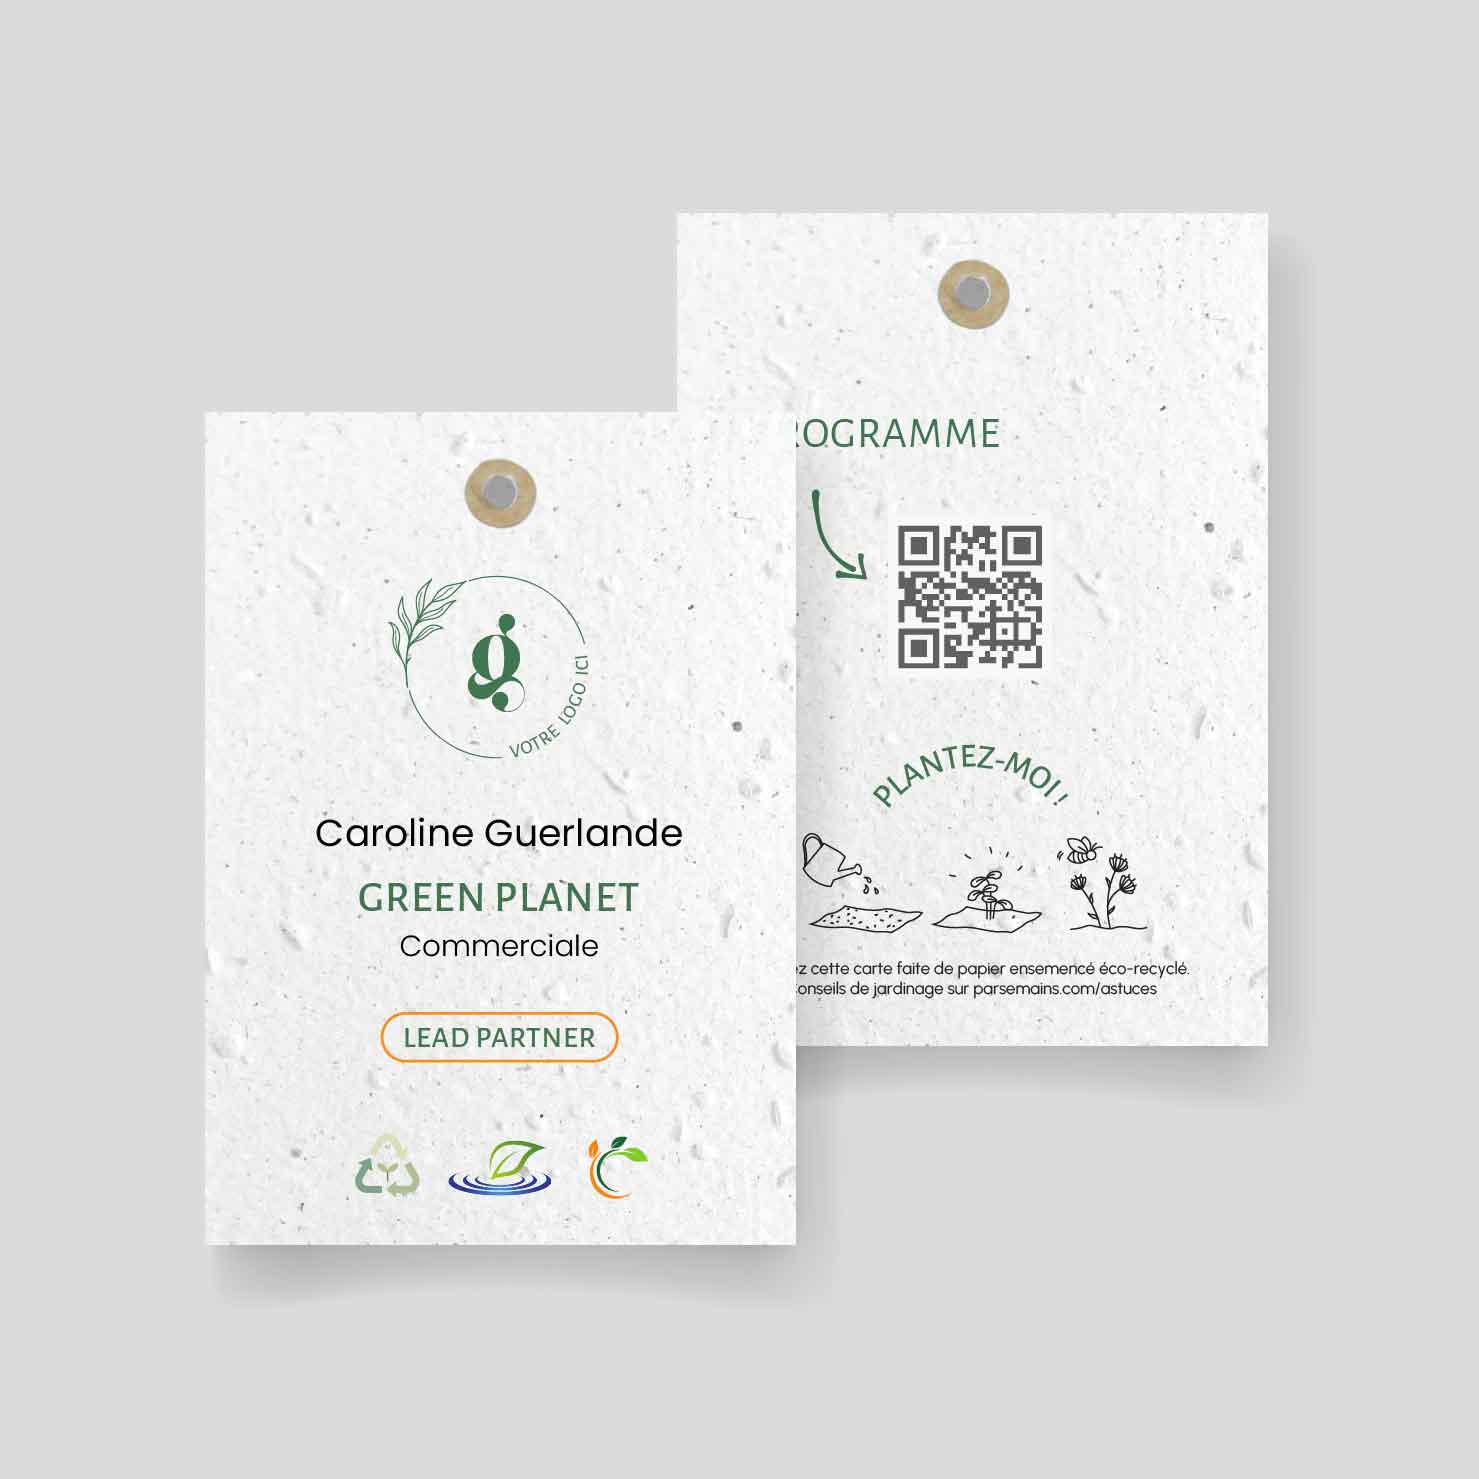 Seeded ecological badges